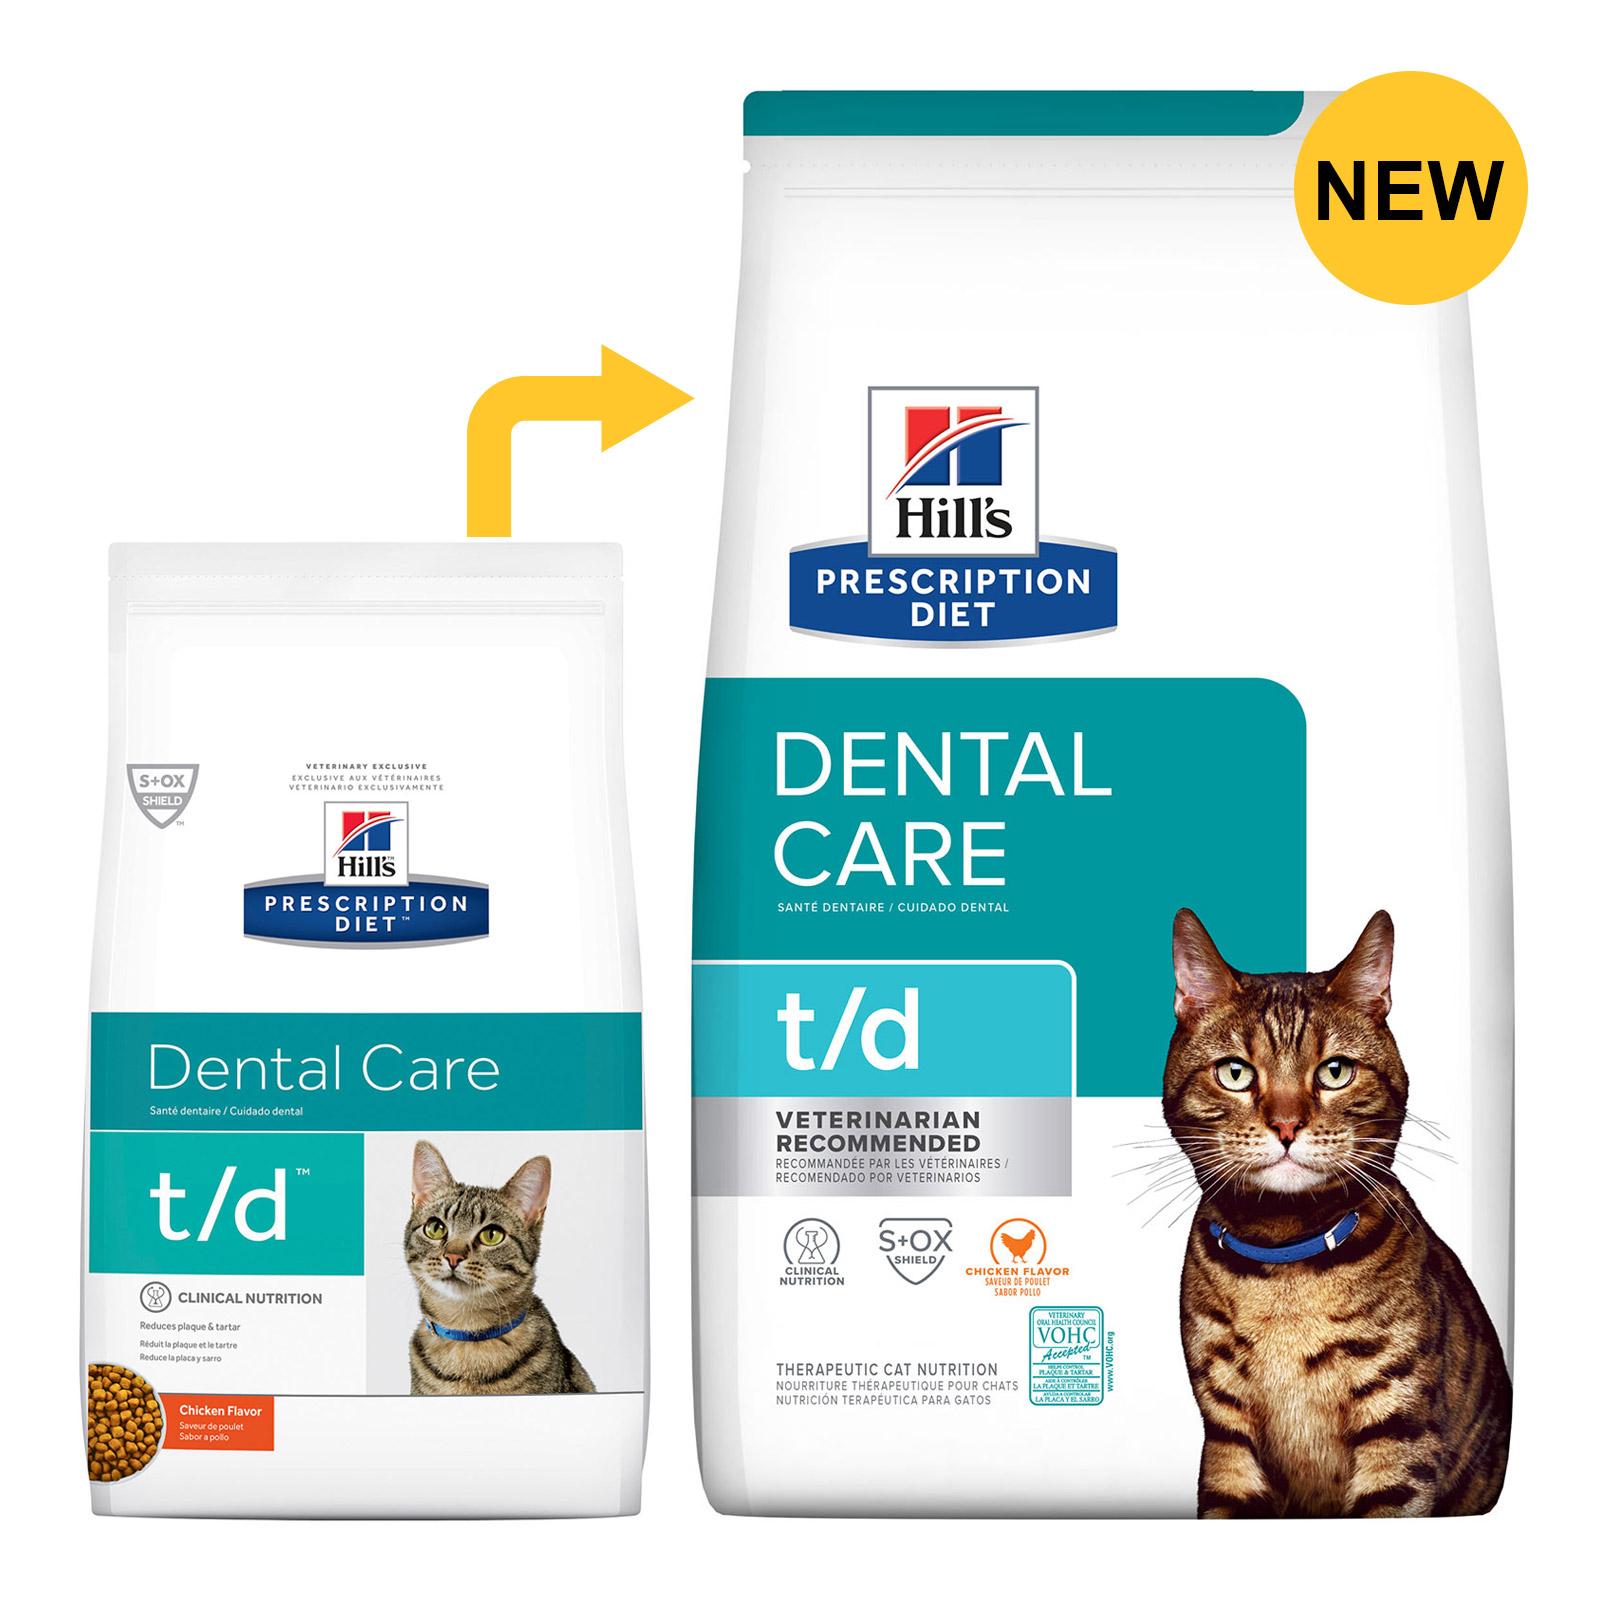 Hill’s Prescription Diet t/d Dental Care Dry Cat Food for Food